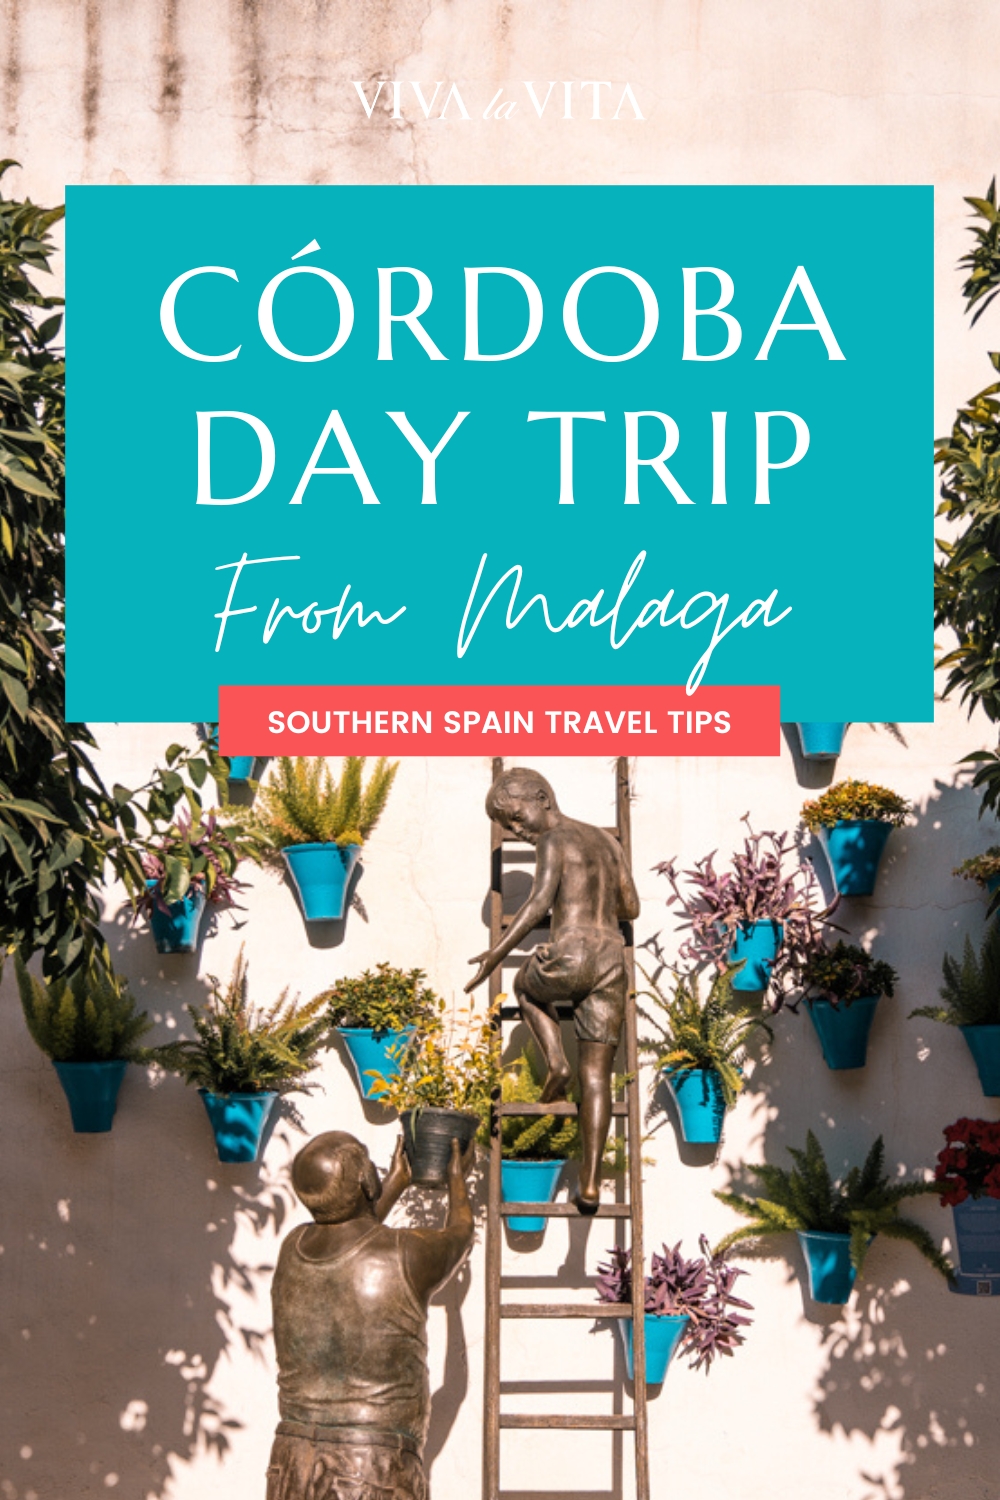 Cordoba day trip from Malaga, Spain